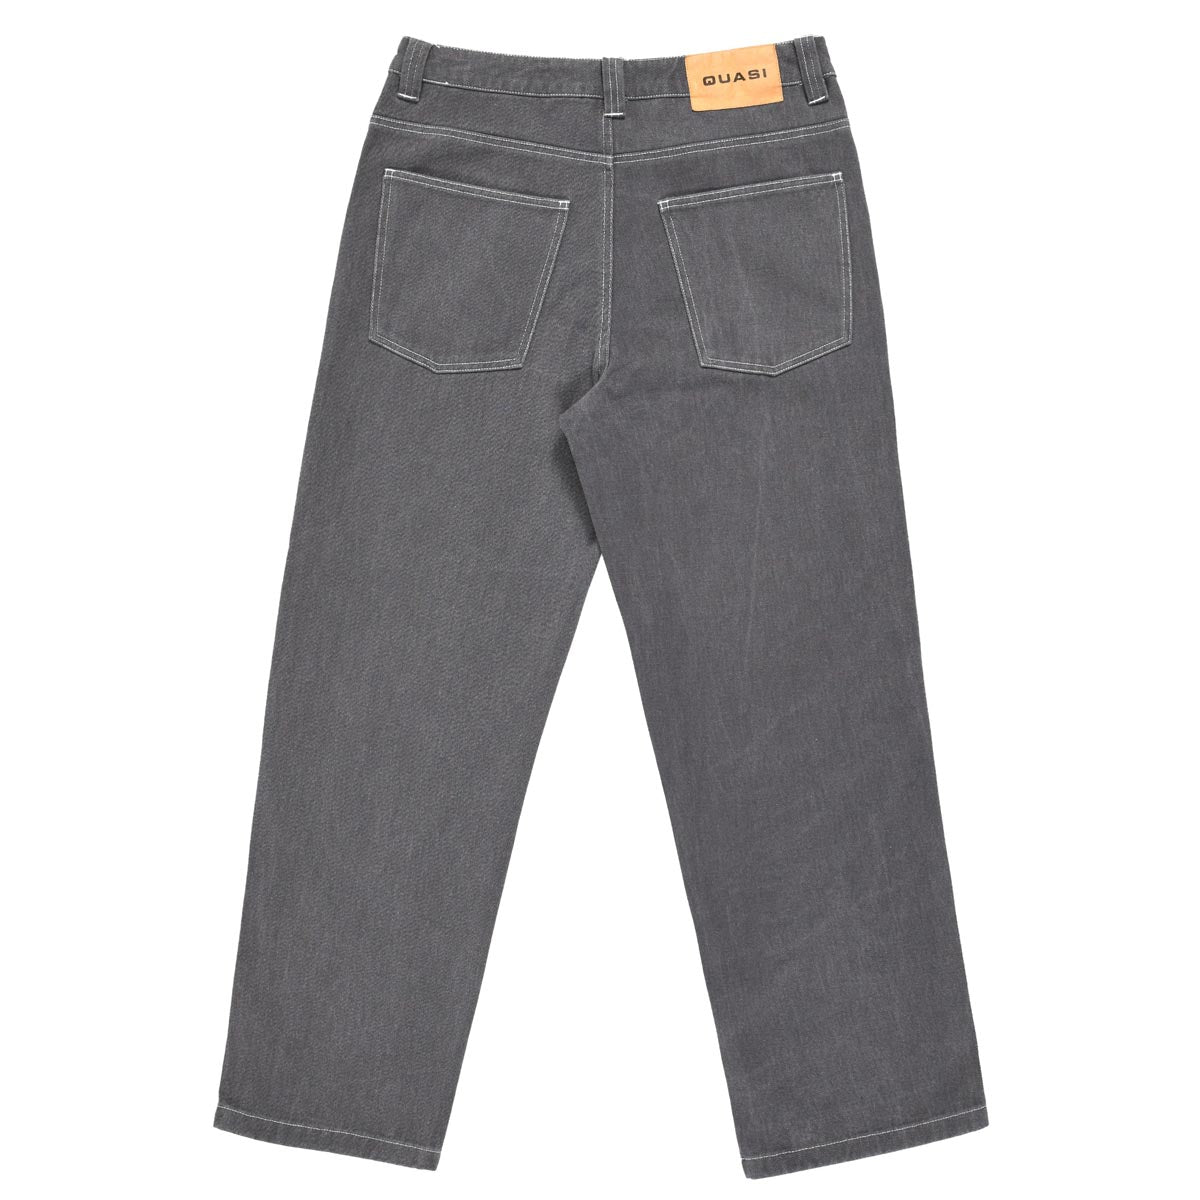 Quasi 102 Jeans - Washed Grey image 4